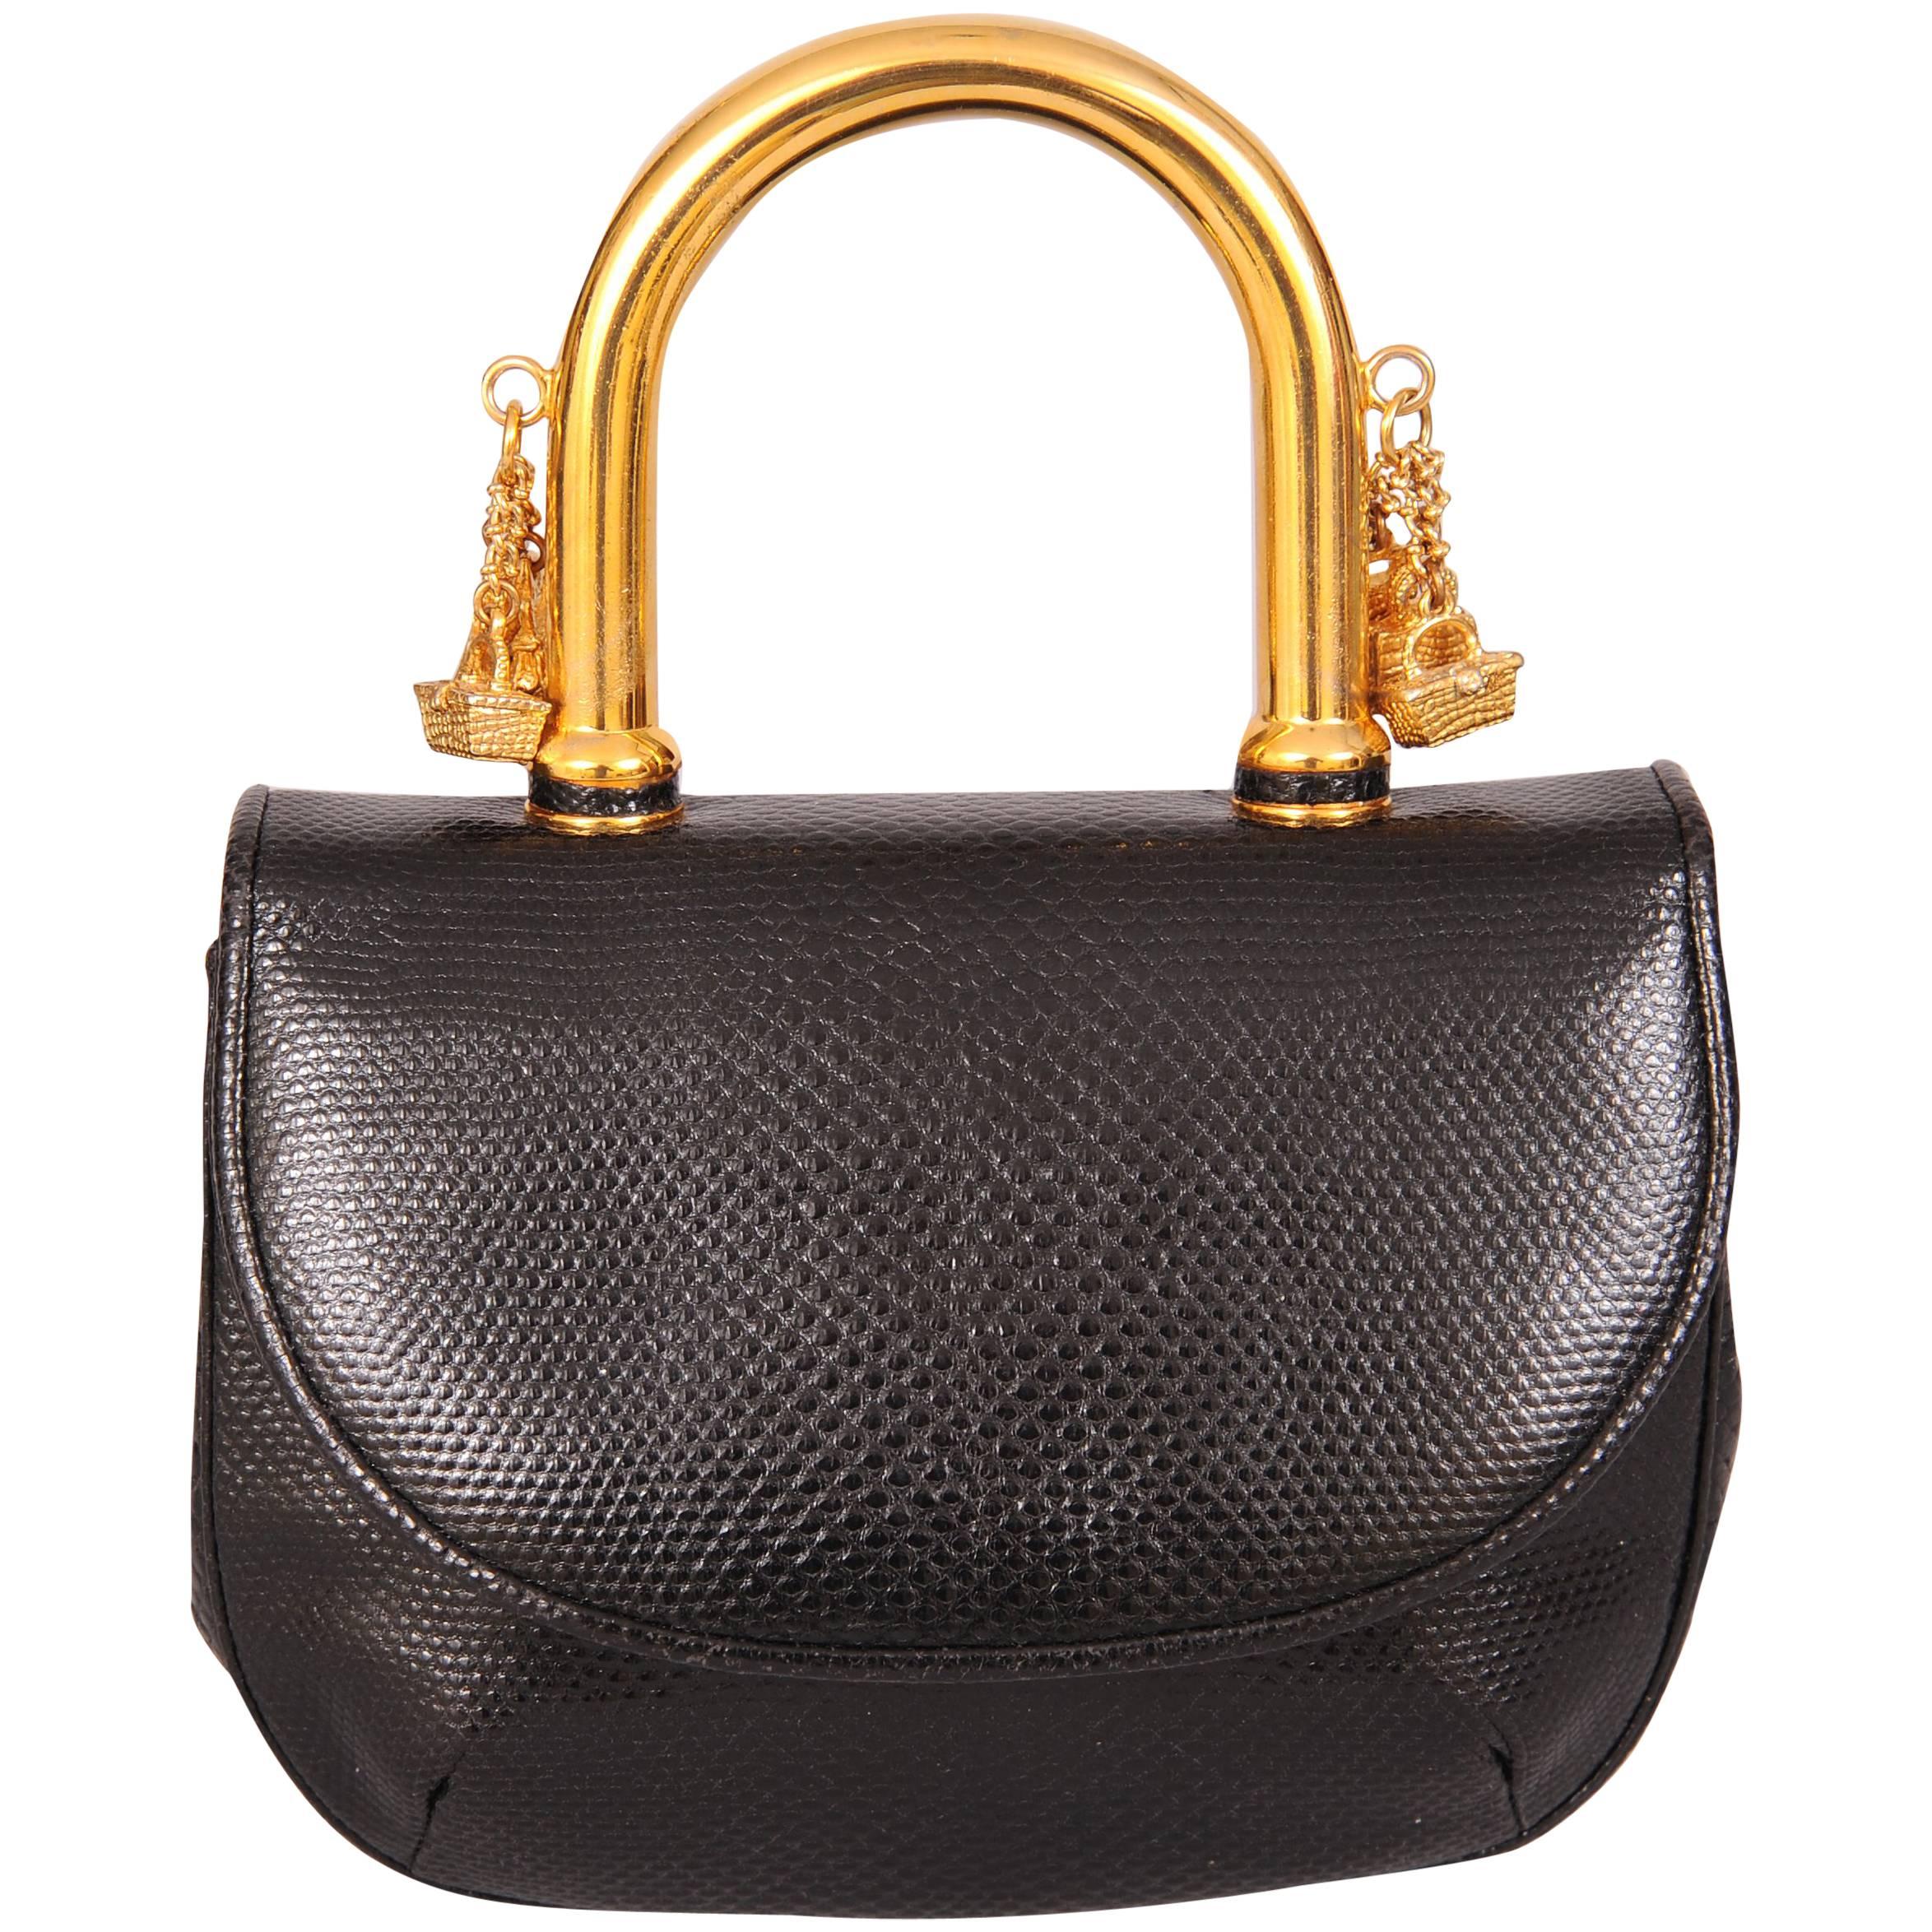 Judith Leiber Charming Black Karung Bag with Gold Charm Handle